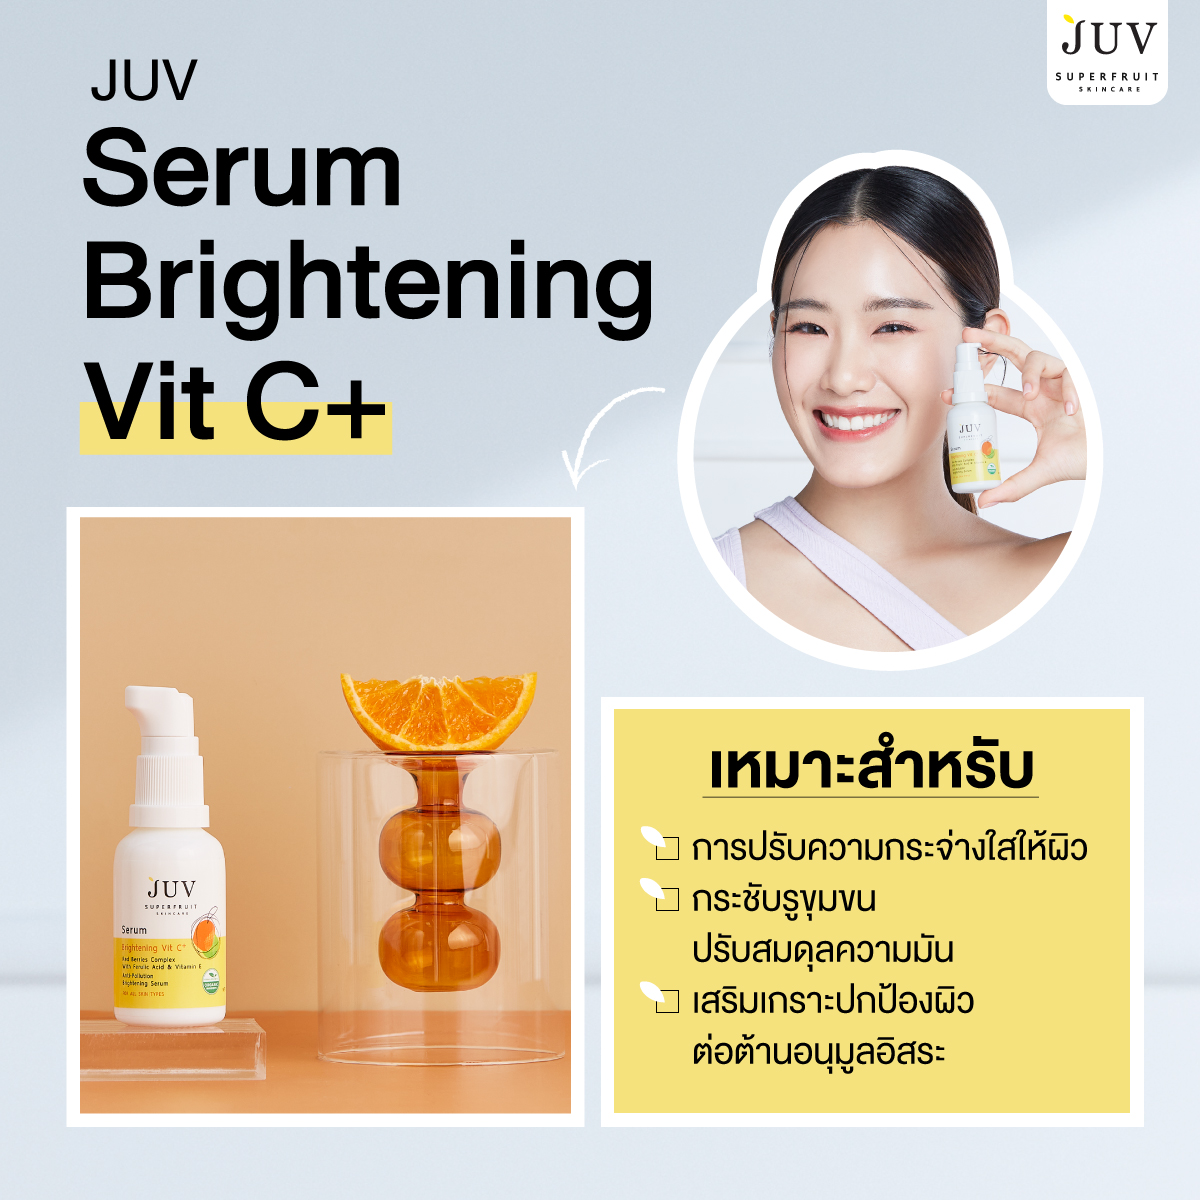 JUV Serum Brightening Vit C+  เซรั่มวิตามิน C บูสต์ผิวไบรท์ เติมผิวเปล่งประกาย